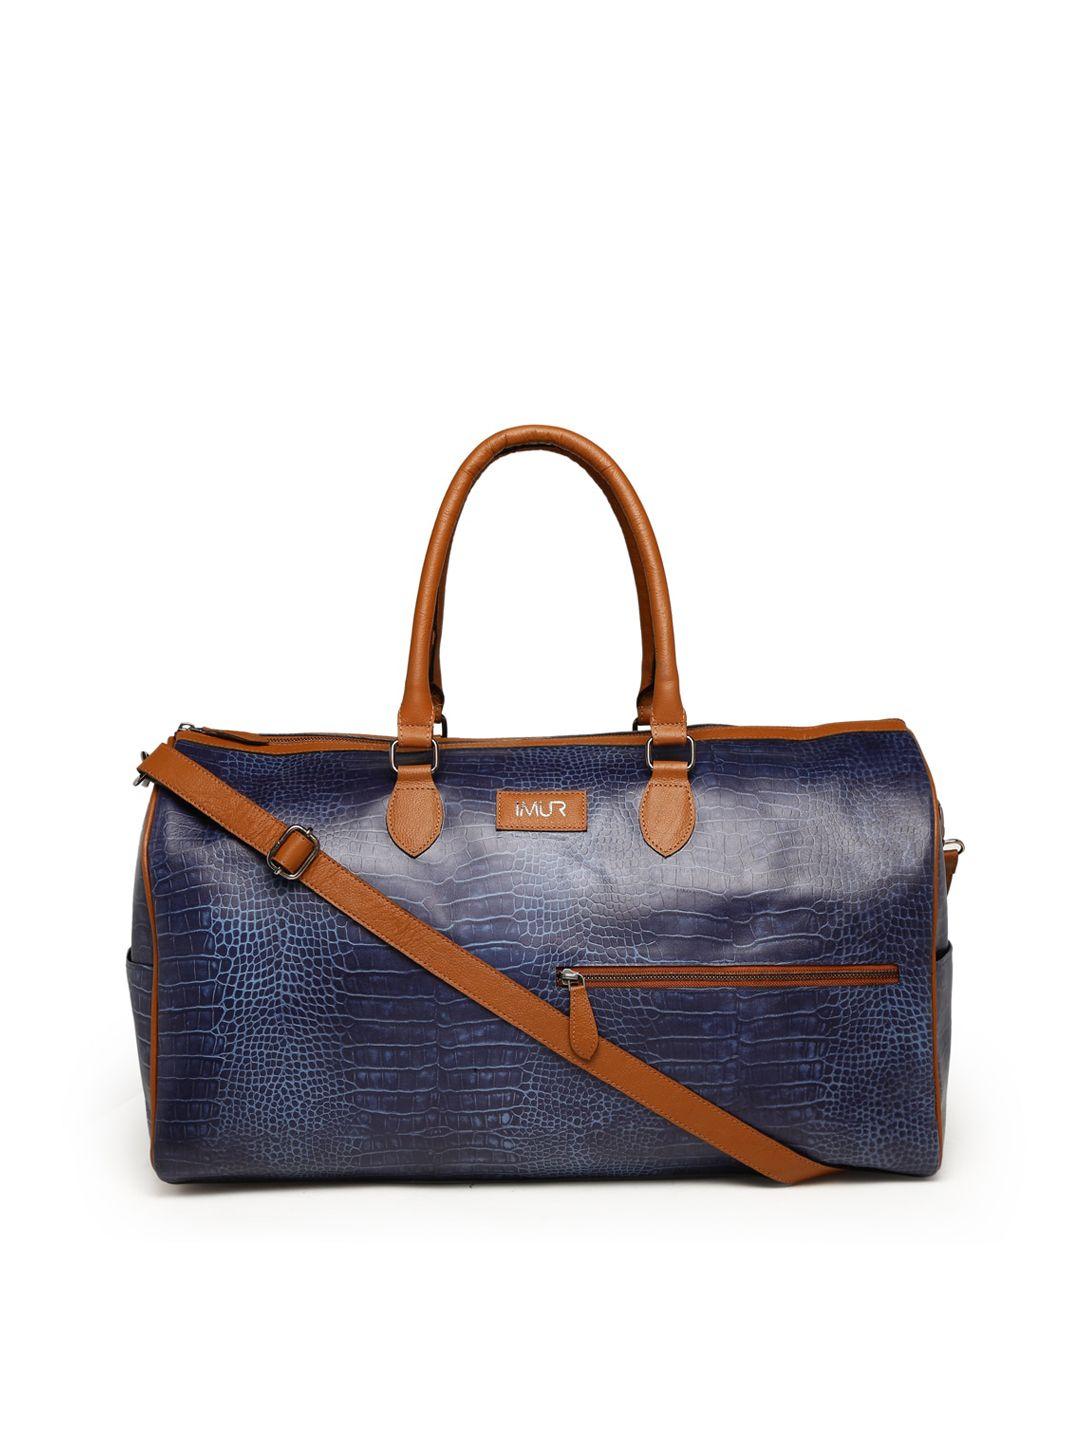 imur navy blue textured travel bag